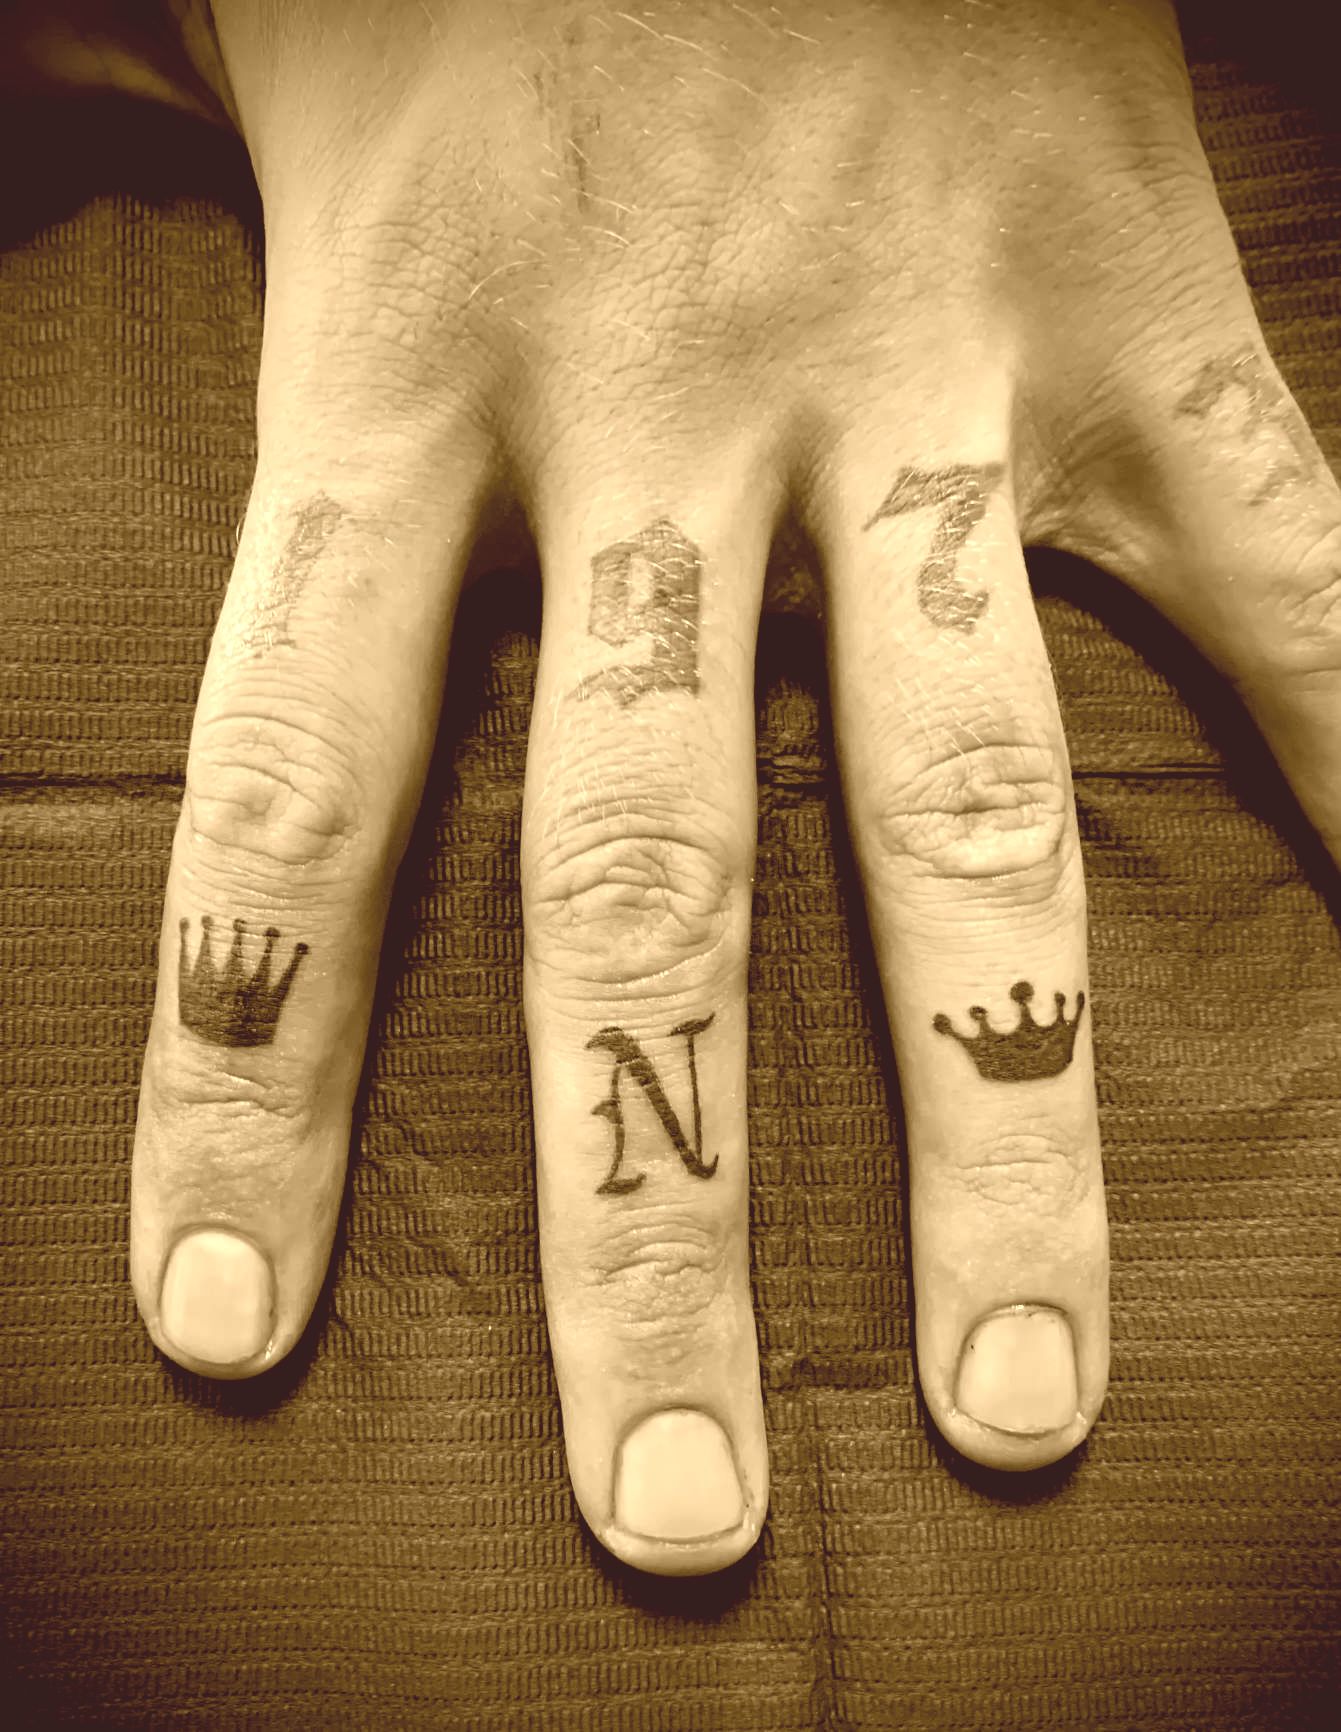 Tattoo Studio Anansi München Munich Vedran symbols small tattoos finger king crown black letter